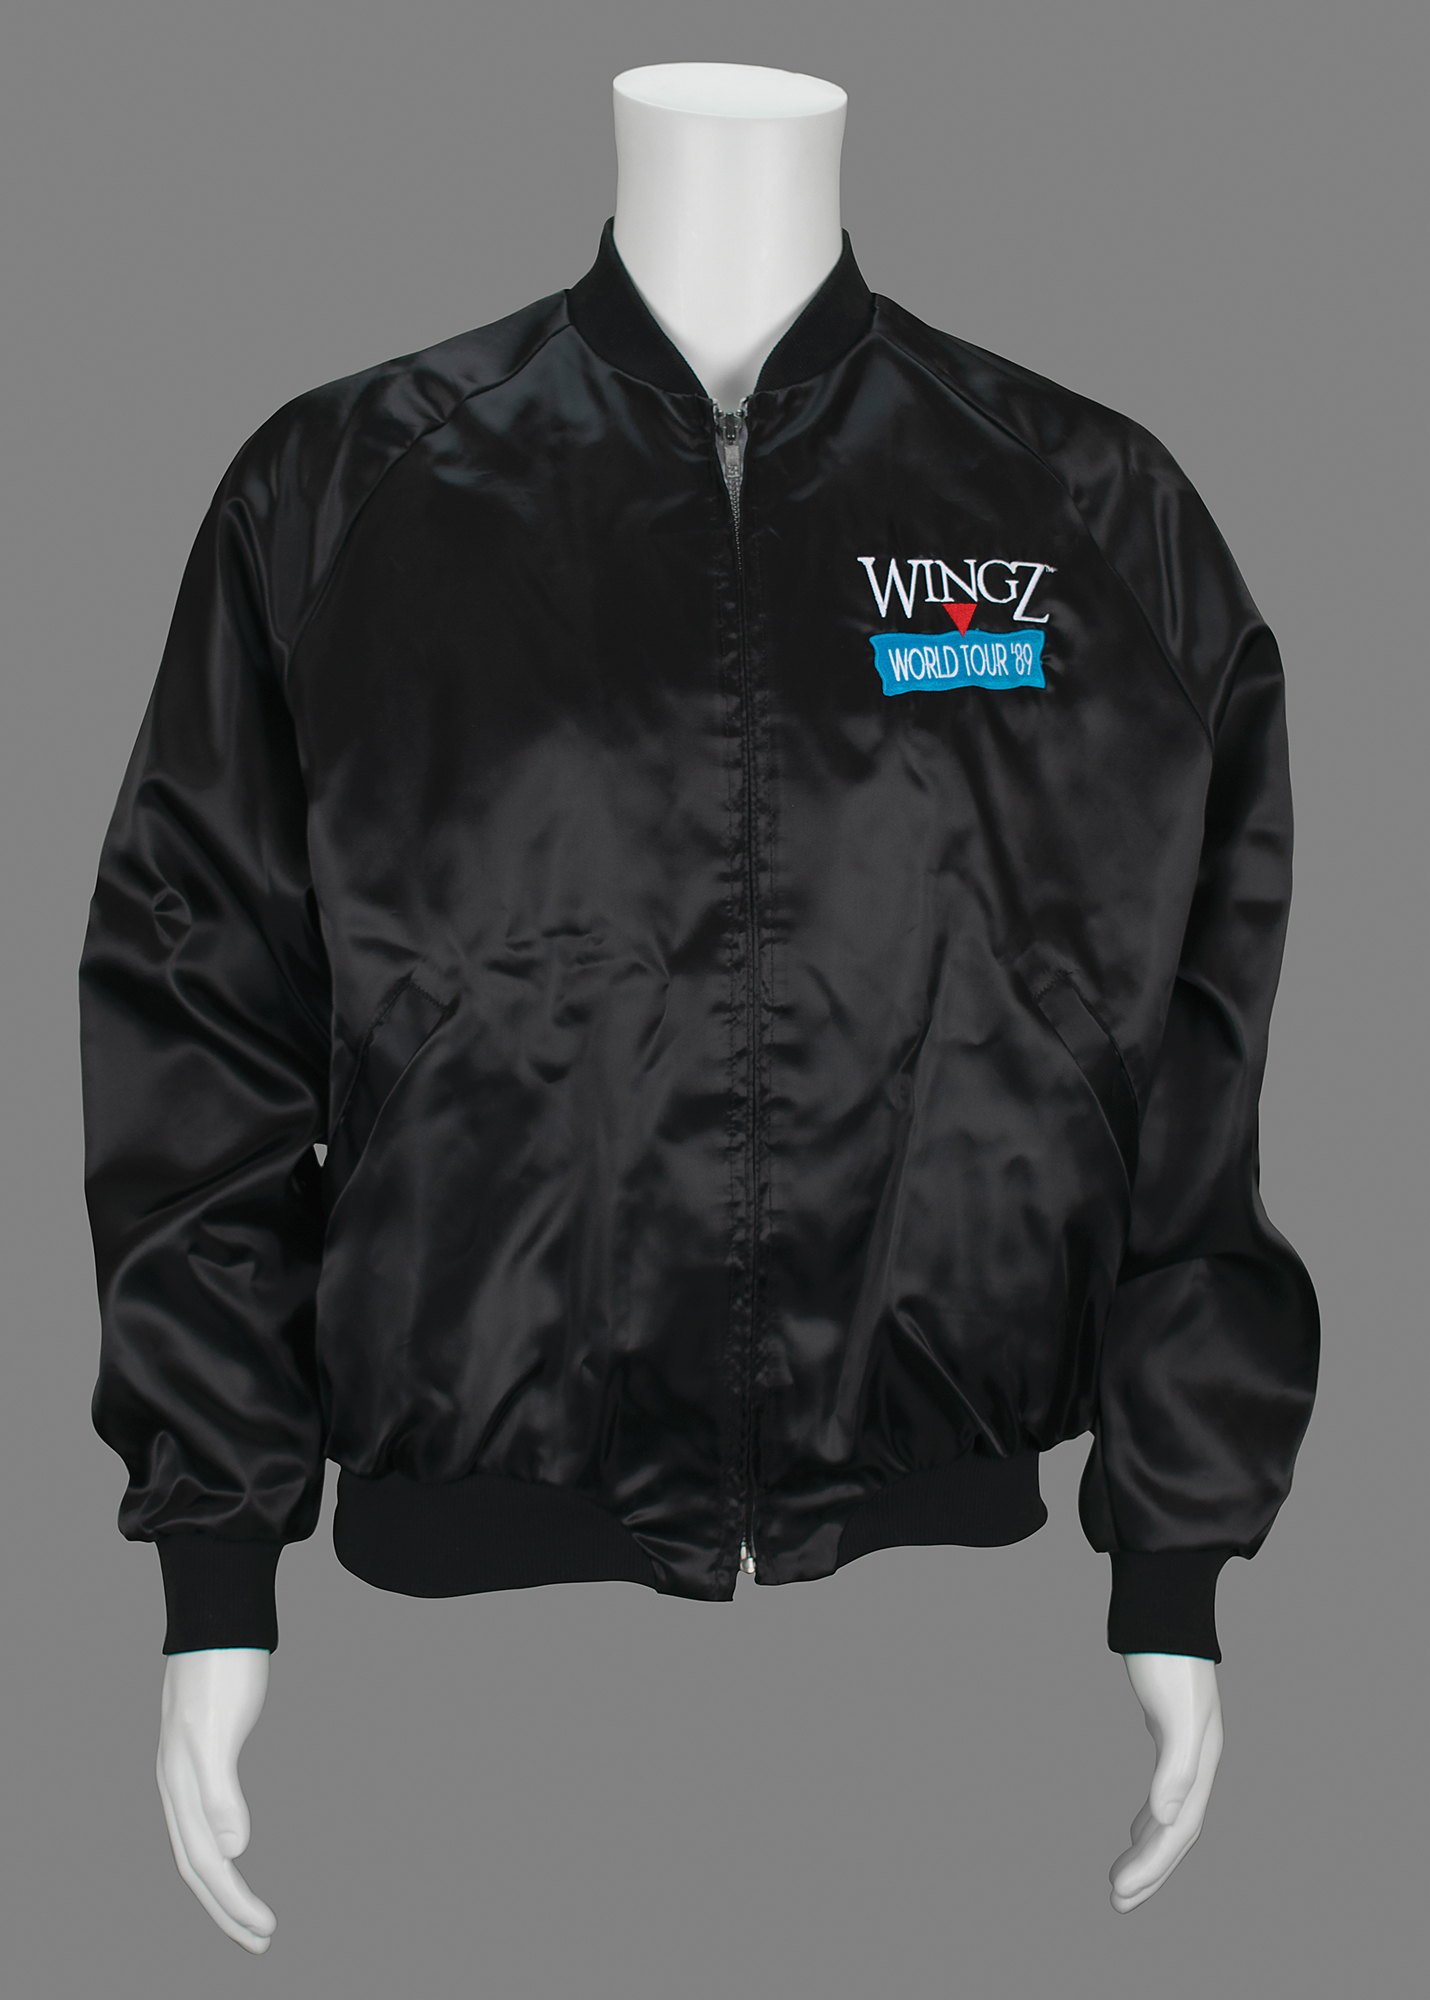 Lot #7010 Steve Jobs Personally Worn NeXT 'Wingz World Tour 1989' Demo Jacket